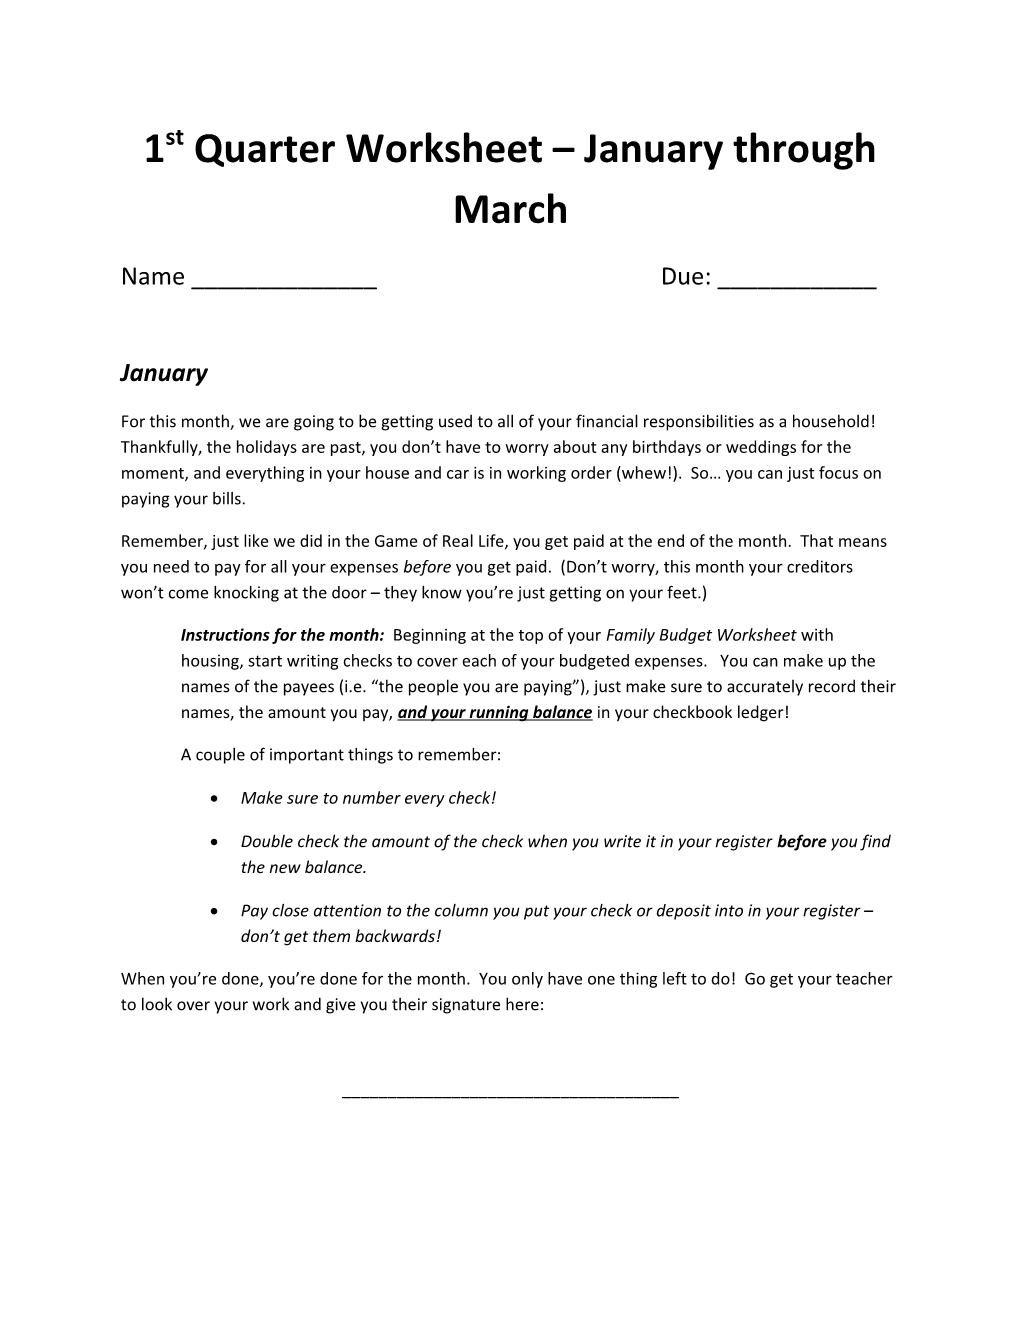 1St Quarter Worksheet January Through March